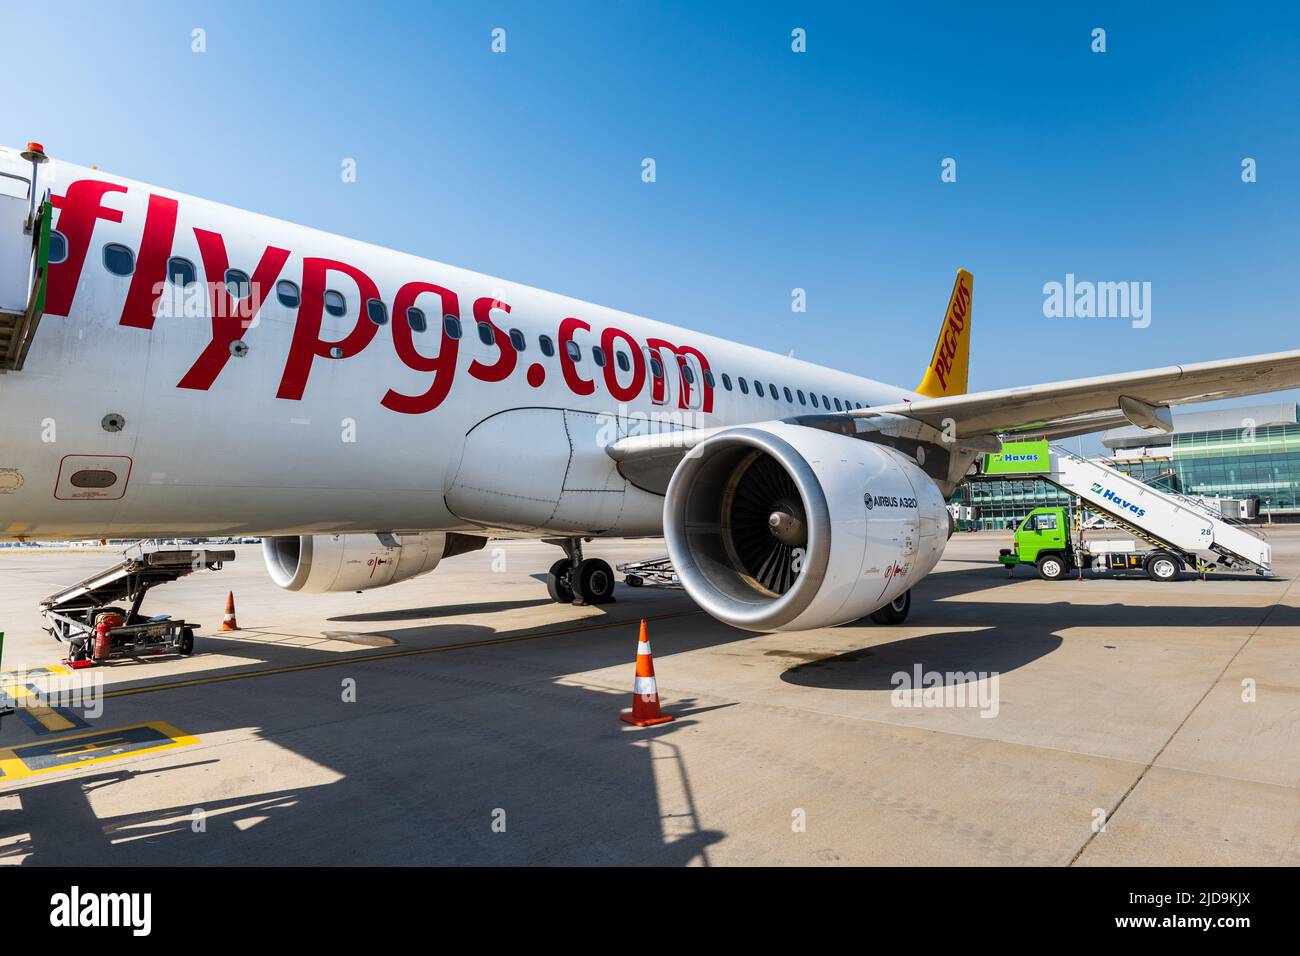 Izmir, Turchia - Giugno 2022: Aereo Airbus Pegasus Airlines sulla pista dell'aeroporto Adnan Menderes di Izmir. Pegasus Airlines Foto Stock